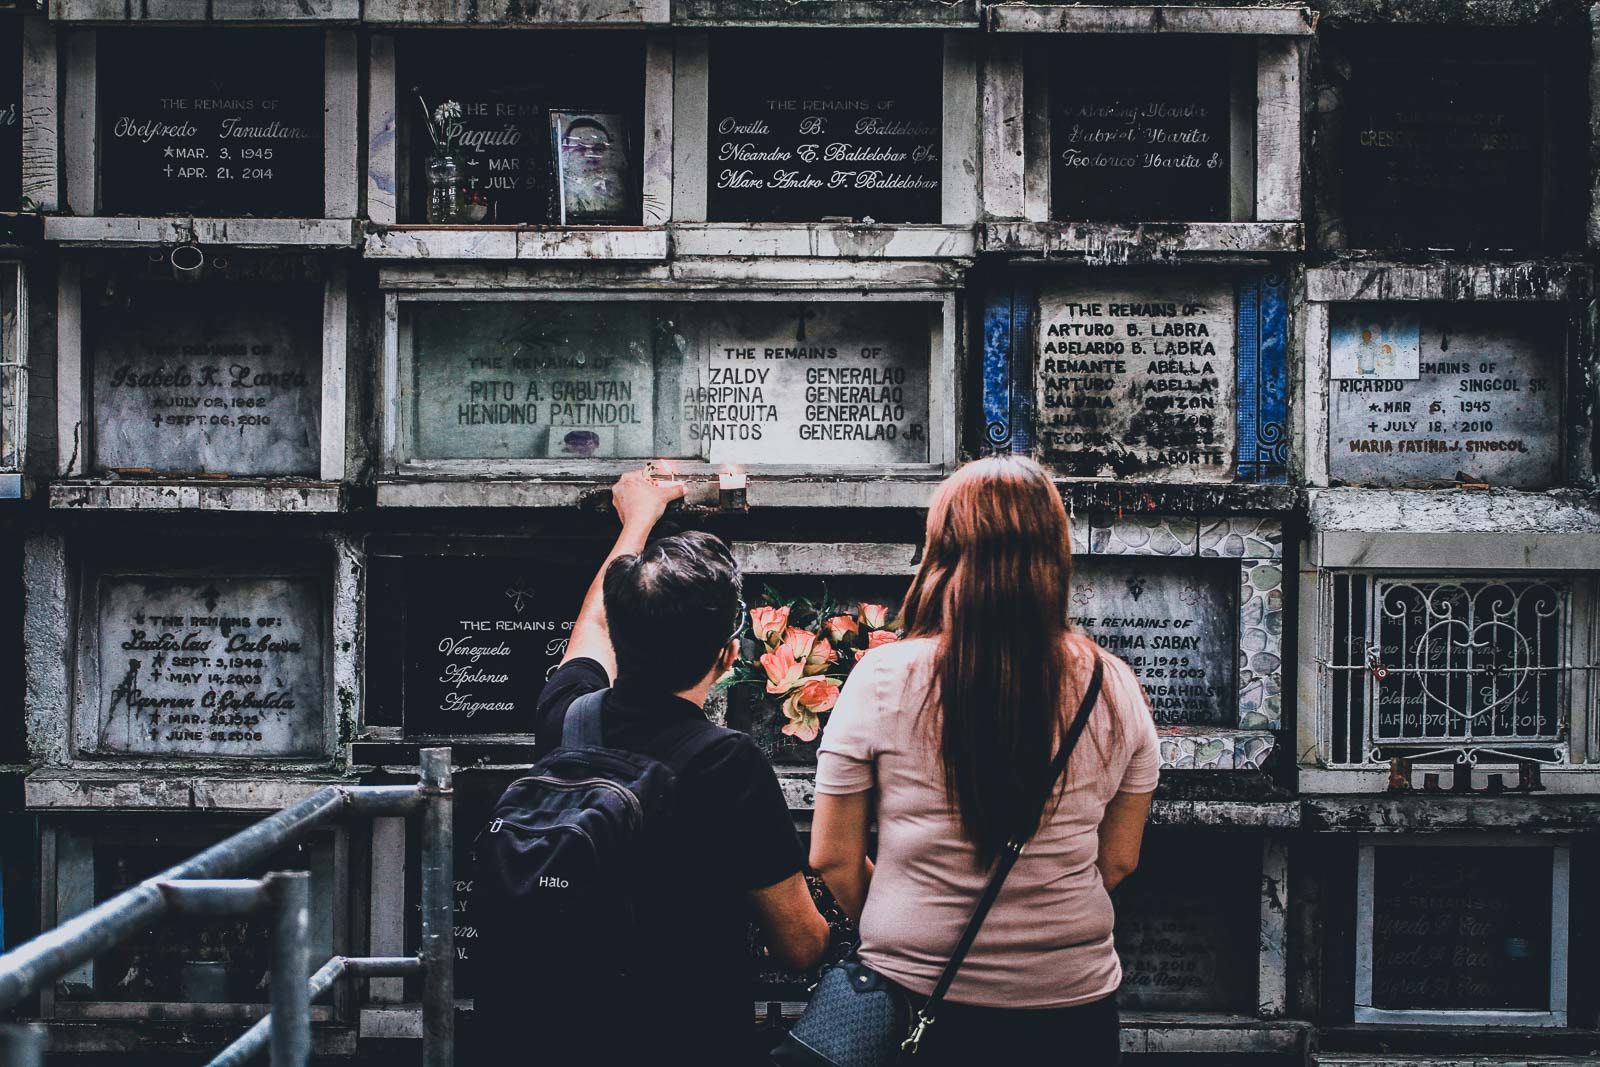 IATF denies Cebu City’s appeal to keep cemeteries open for Kalag-kalag